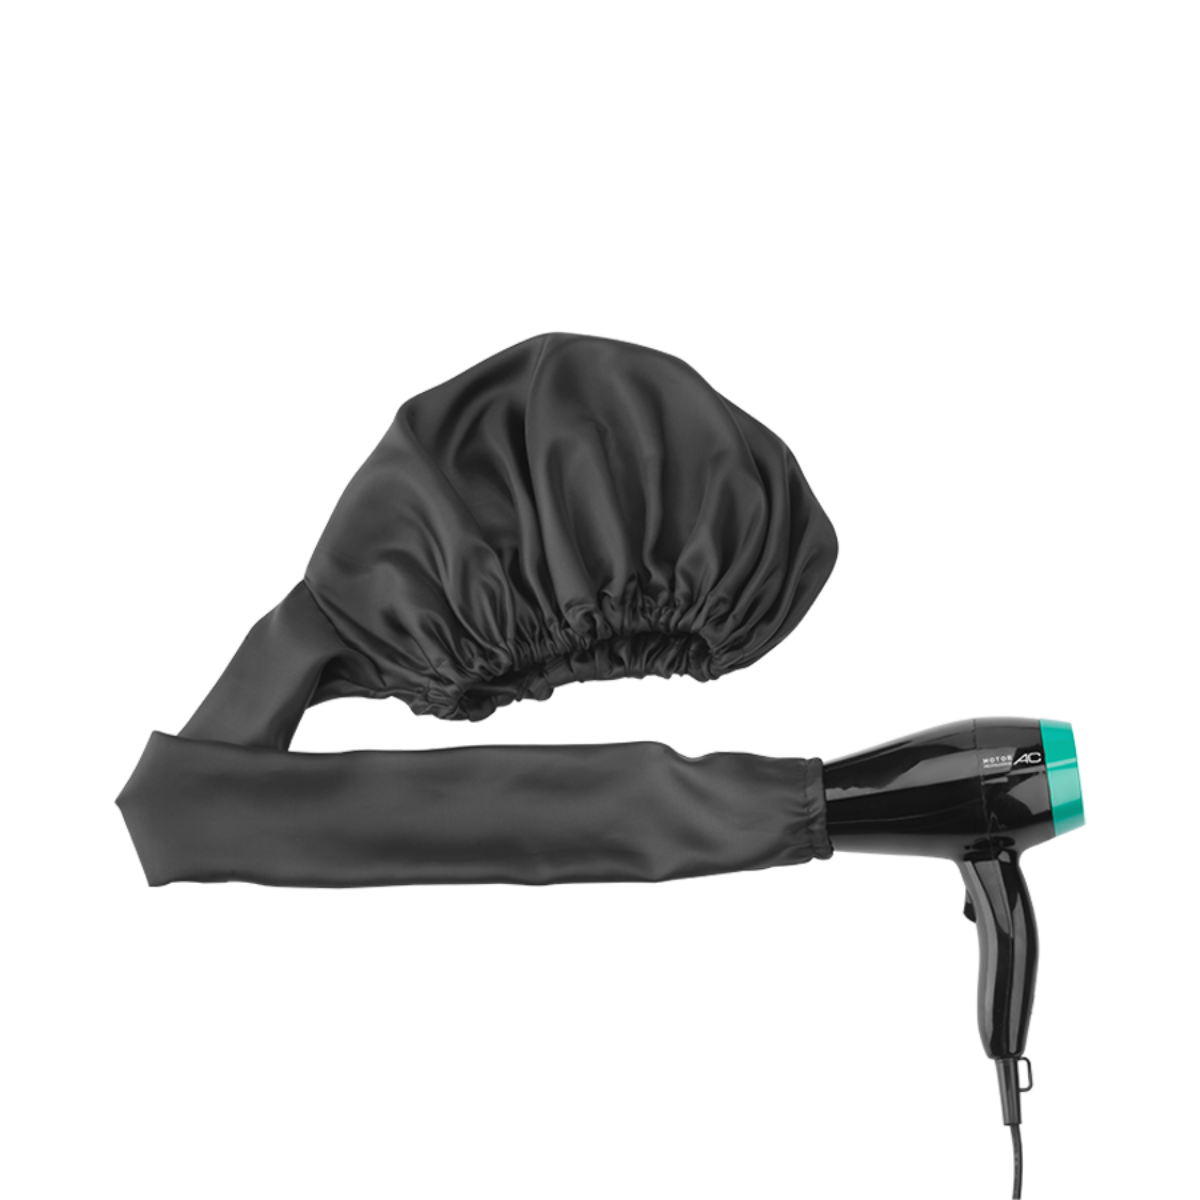 Dompel Satin hair cap with dryer attach, best Diffuser Hair Cap Model 393 - depilcompany